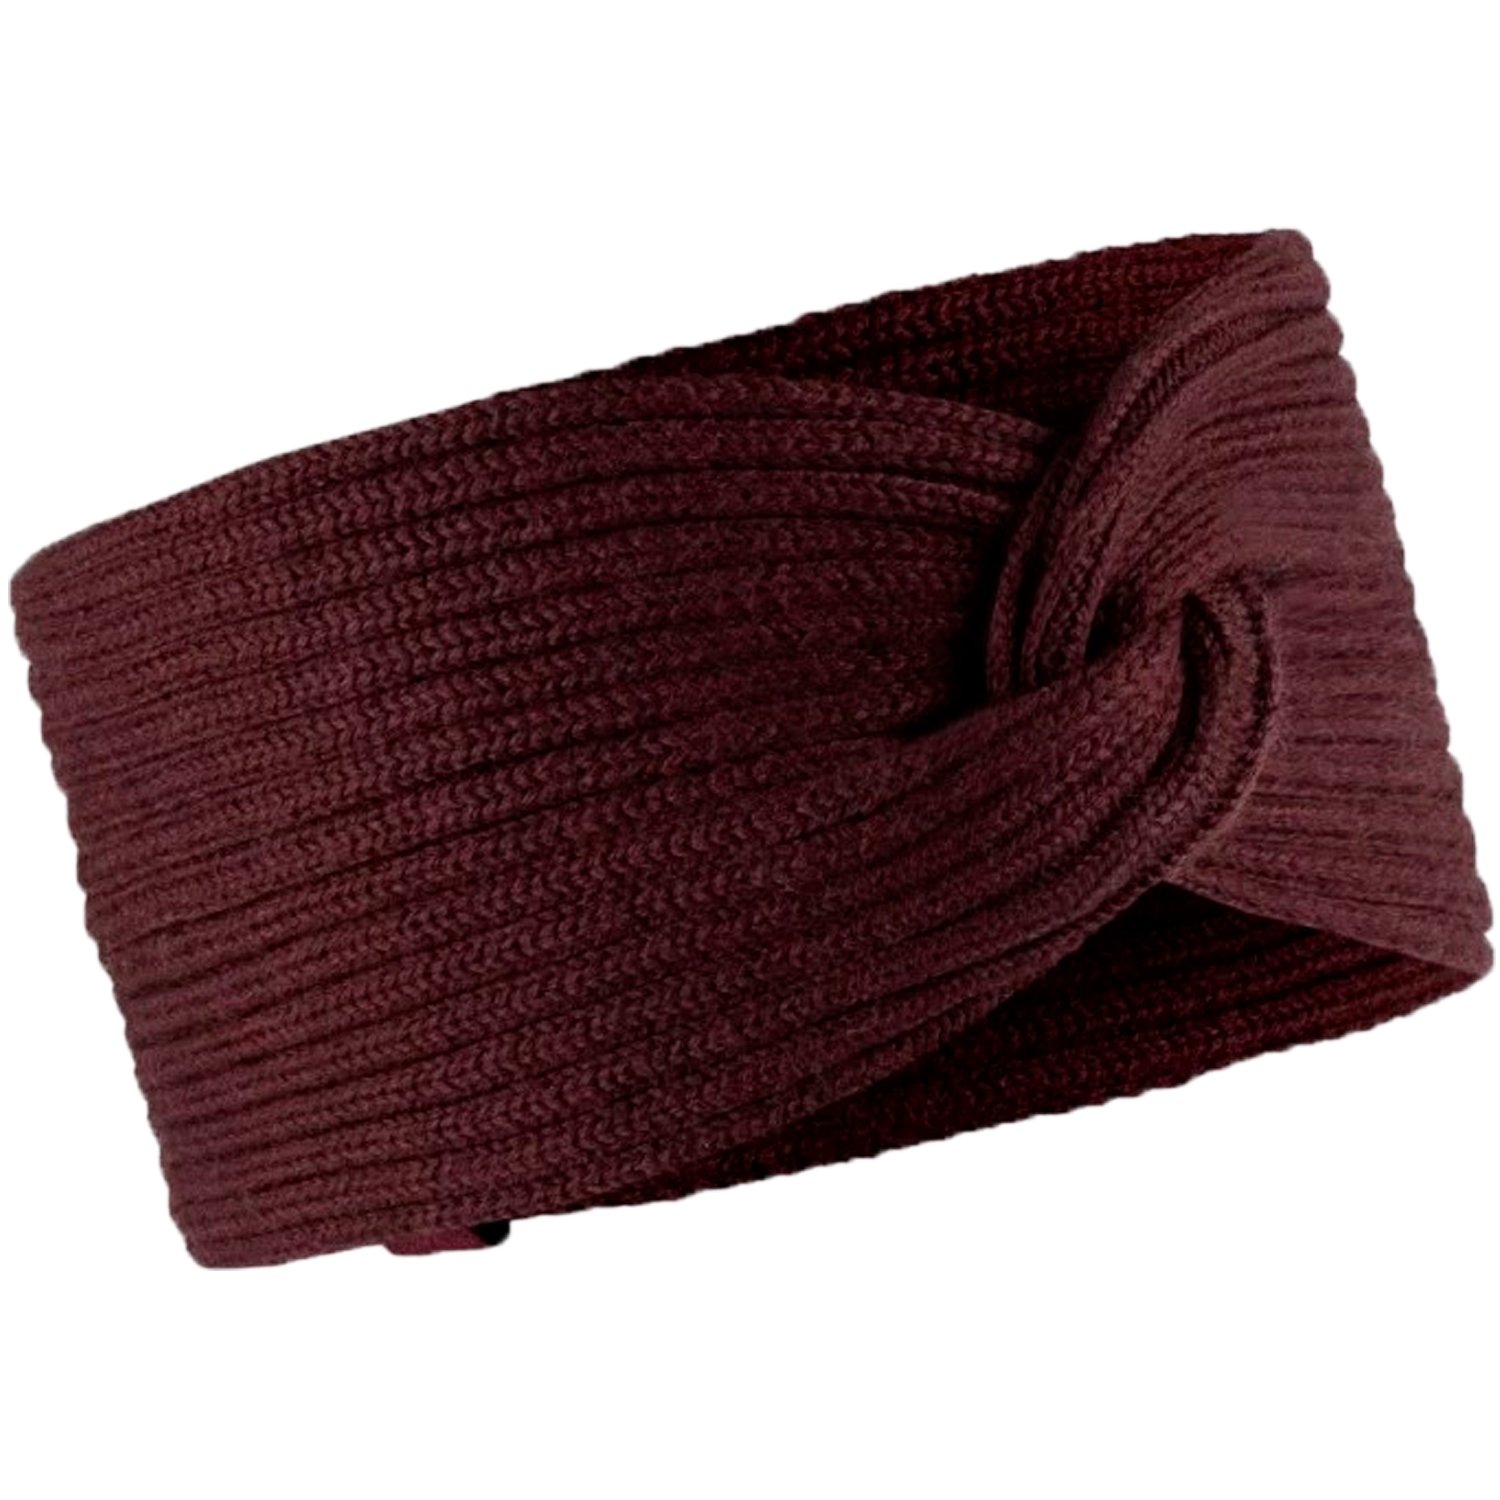 Повязка Buff Knitted Headband Norval Maroon, женский, 126459.632.10.00 купить на ЖДБЗ.ру